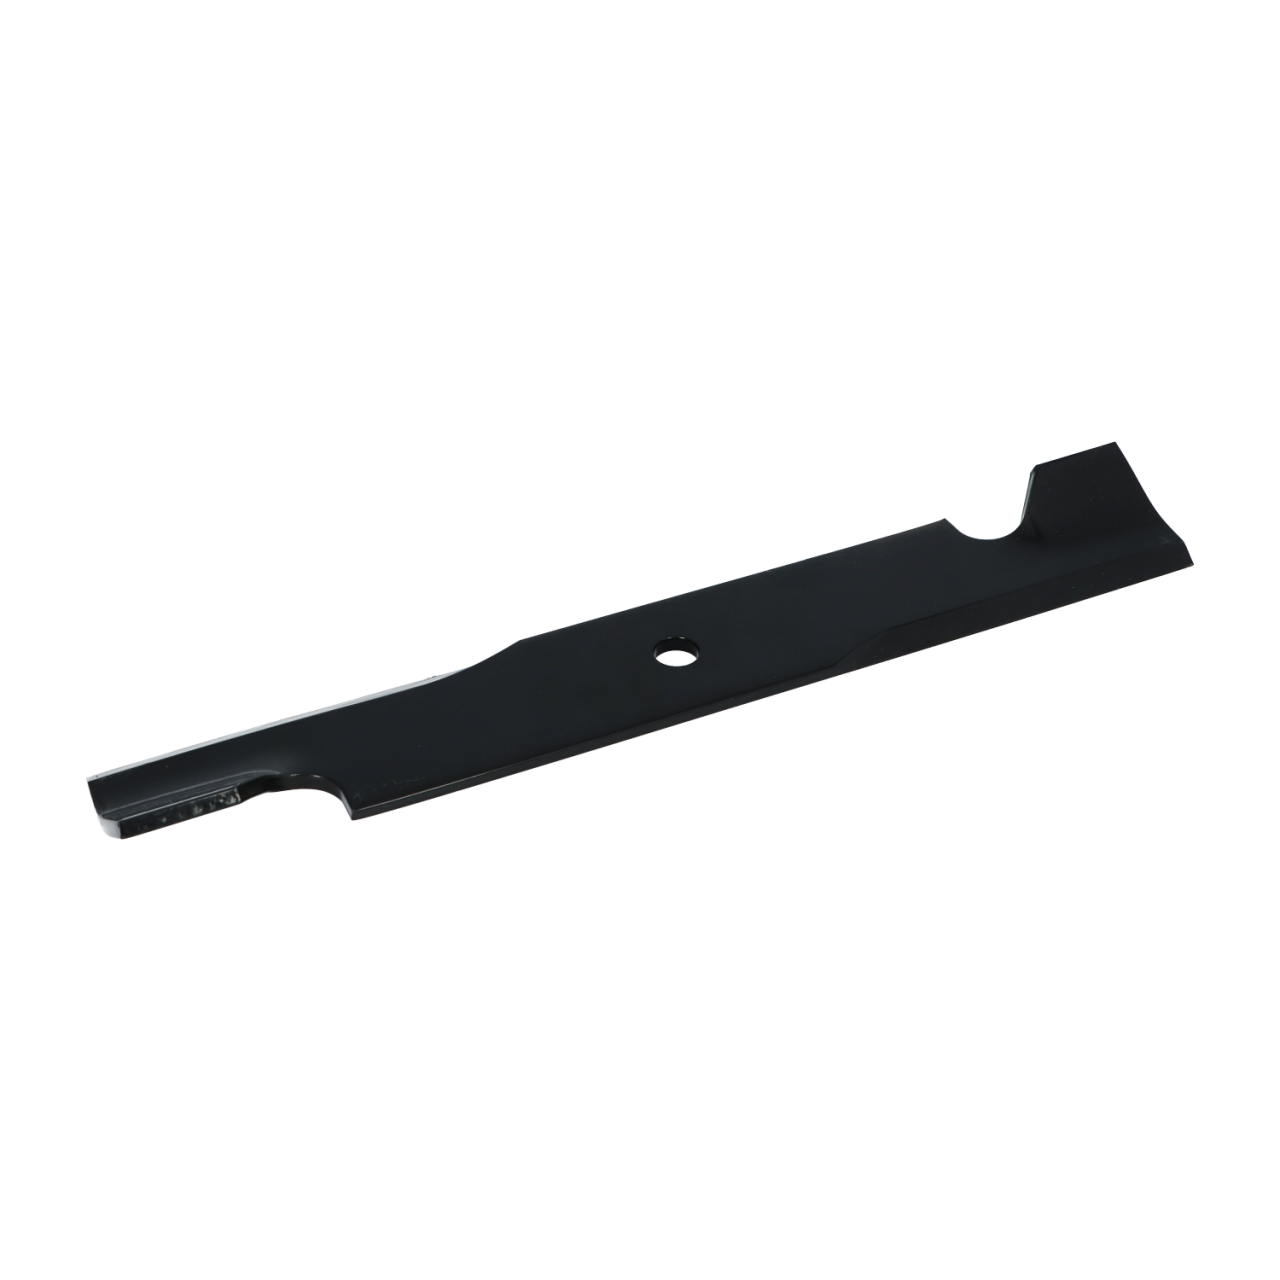 Blade-16.5 inch (high flow)